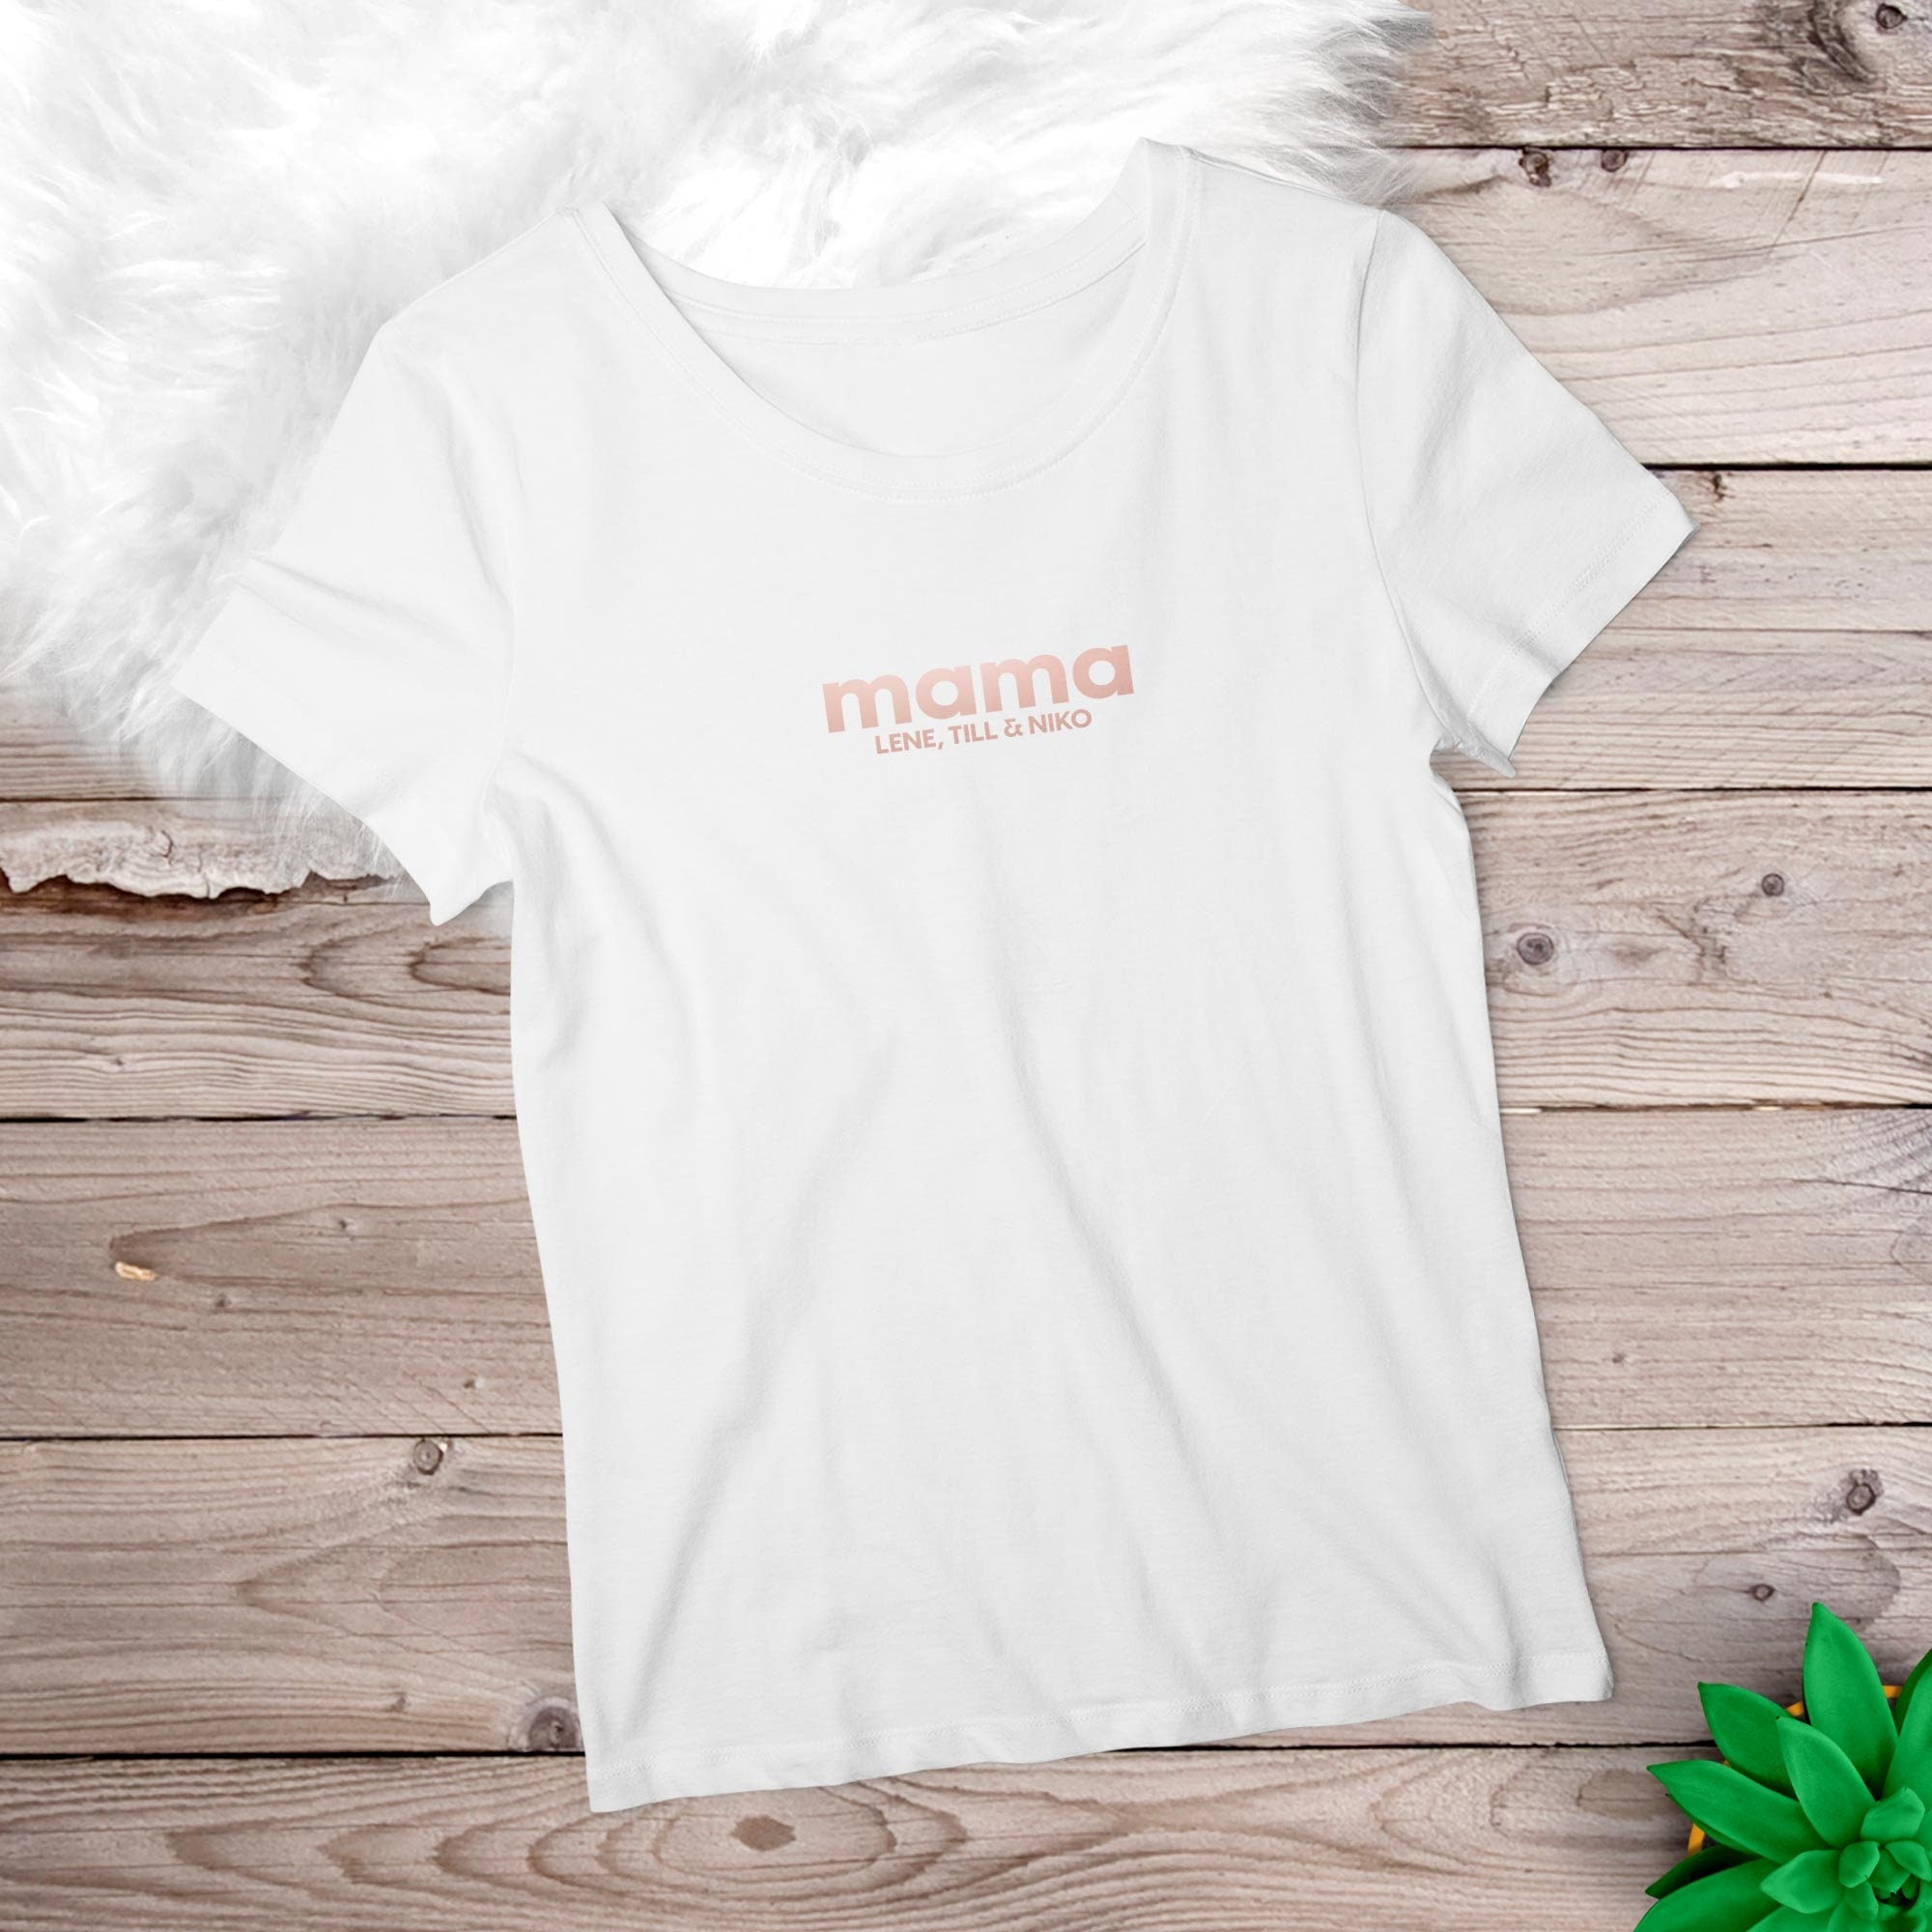 Mama T-Shirt rosé, personalisiert mit Namen